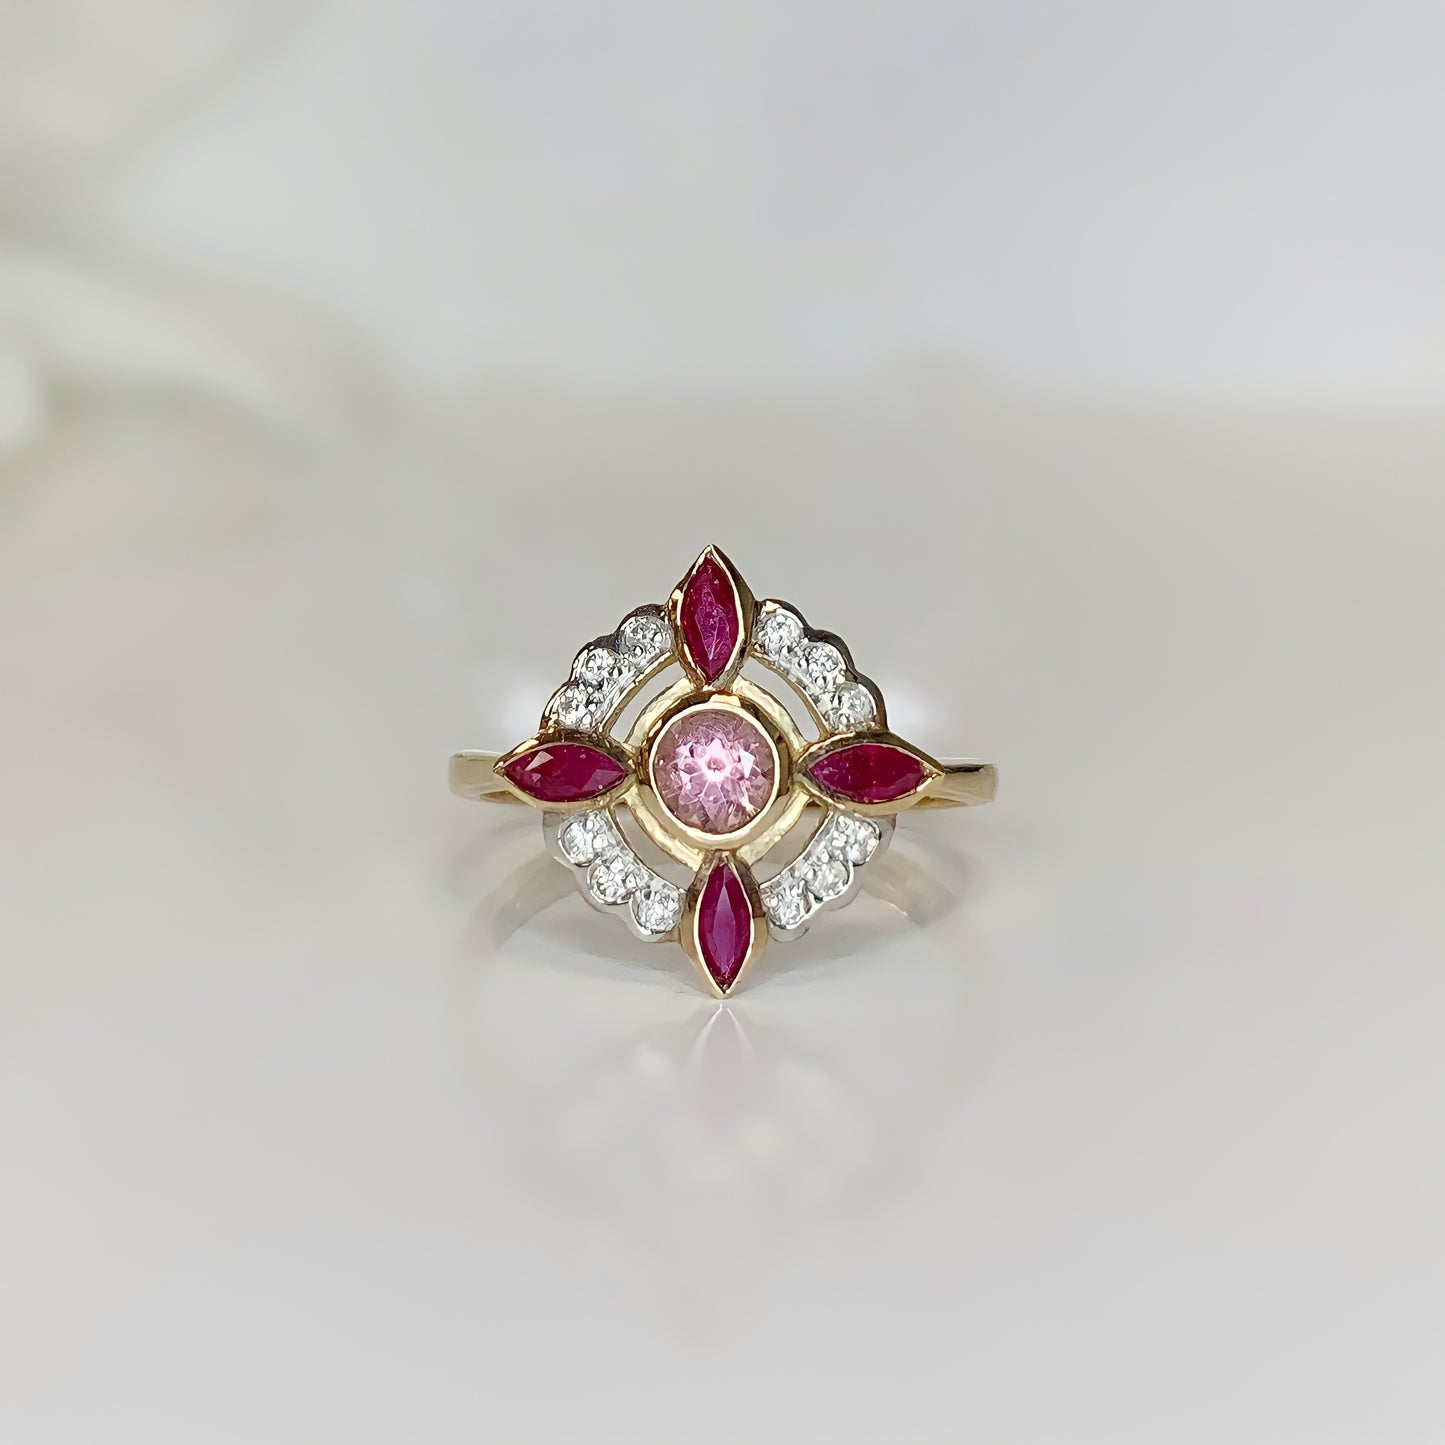 Edwardian Inspired 9ct Yellow Gold Pink Tourmaline Ruby And Diamond Ring - SIZE O